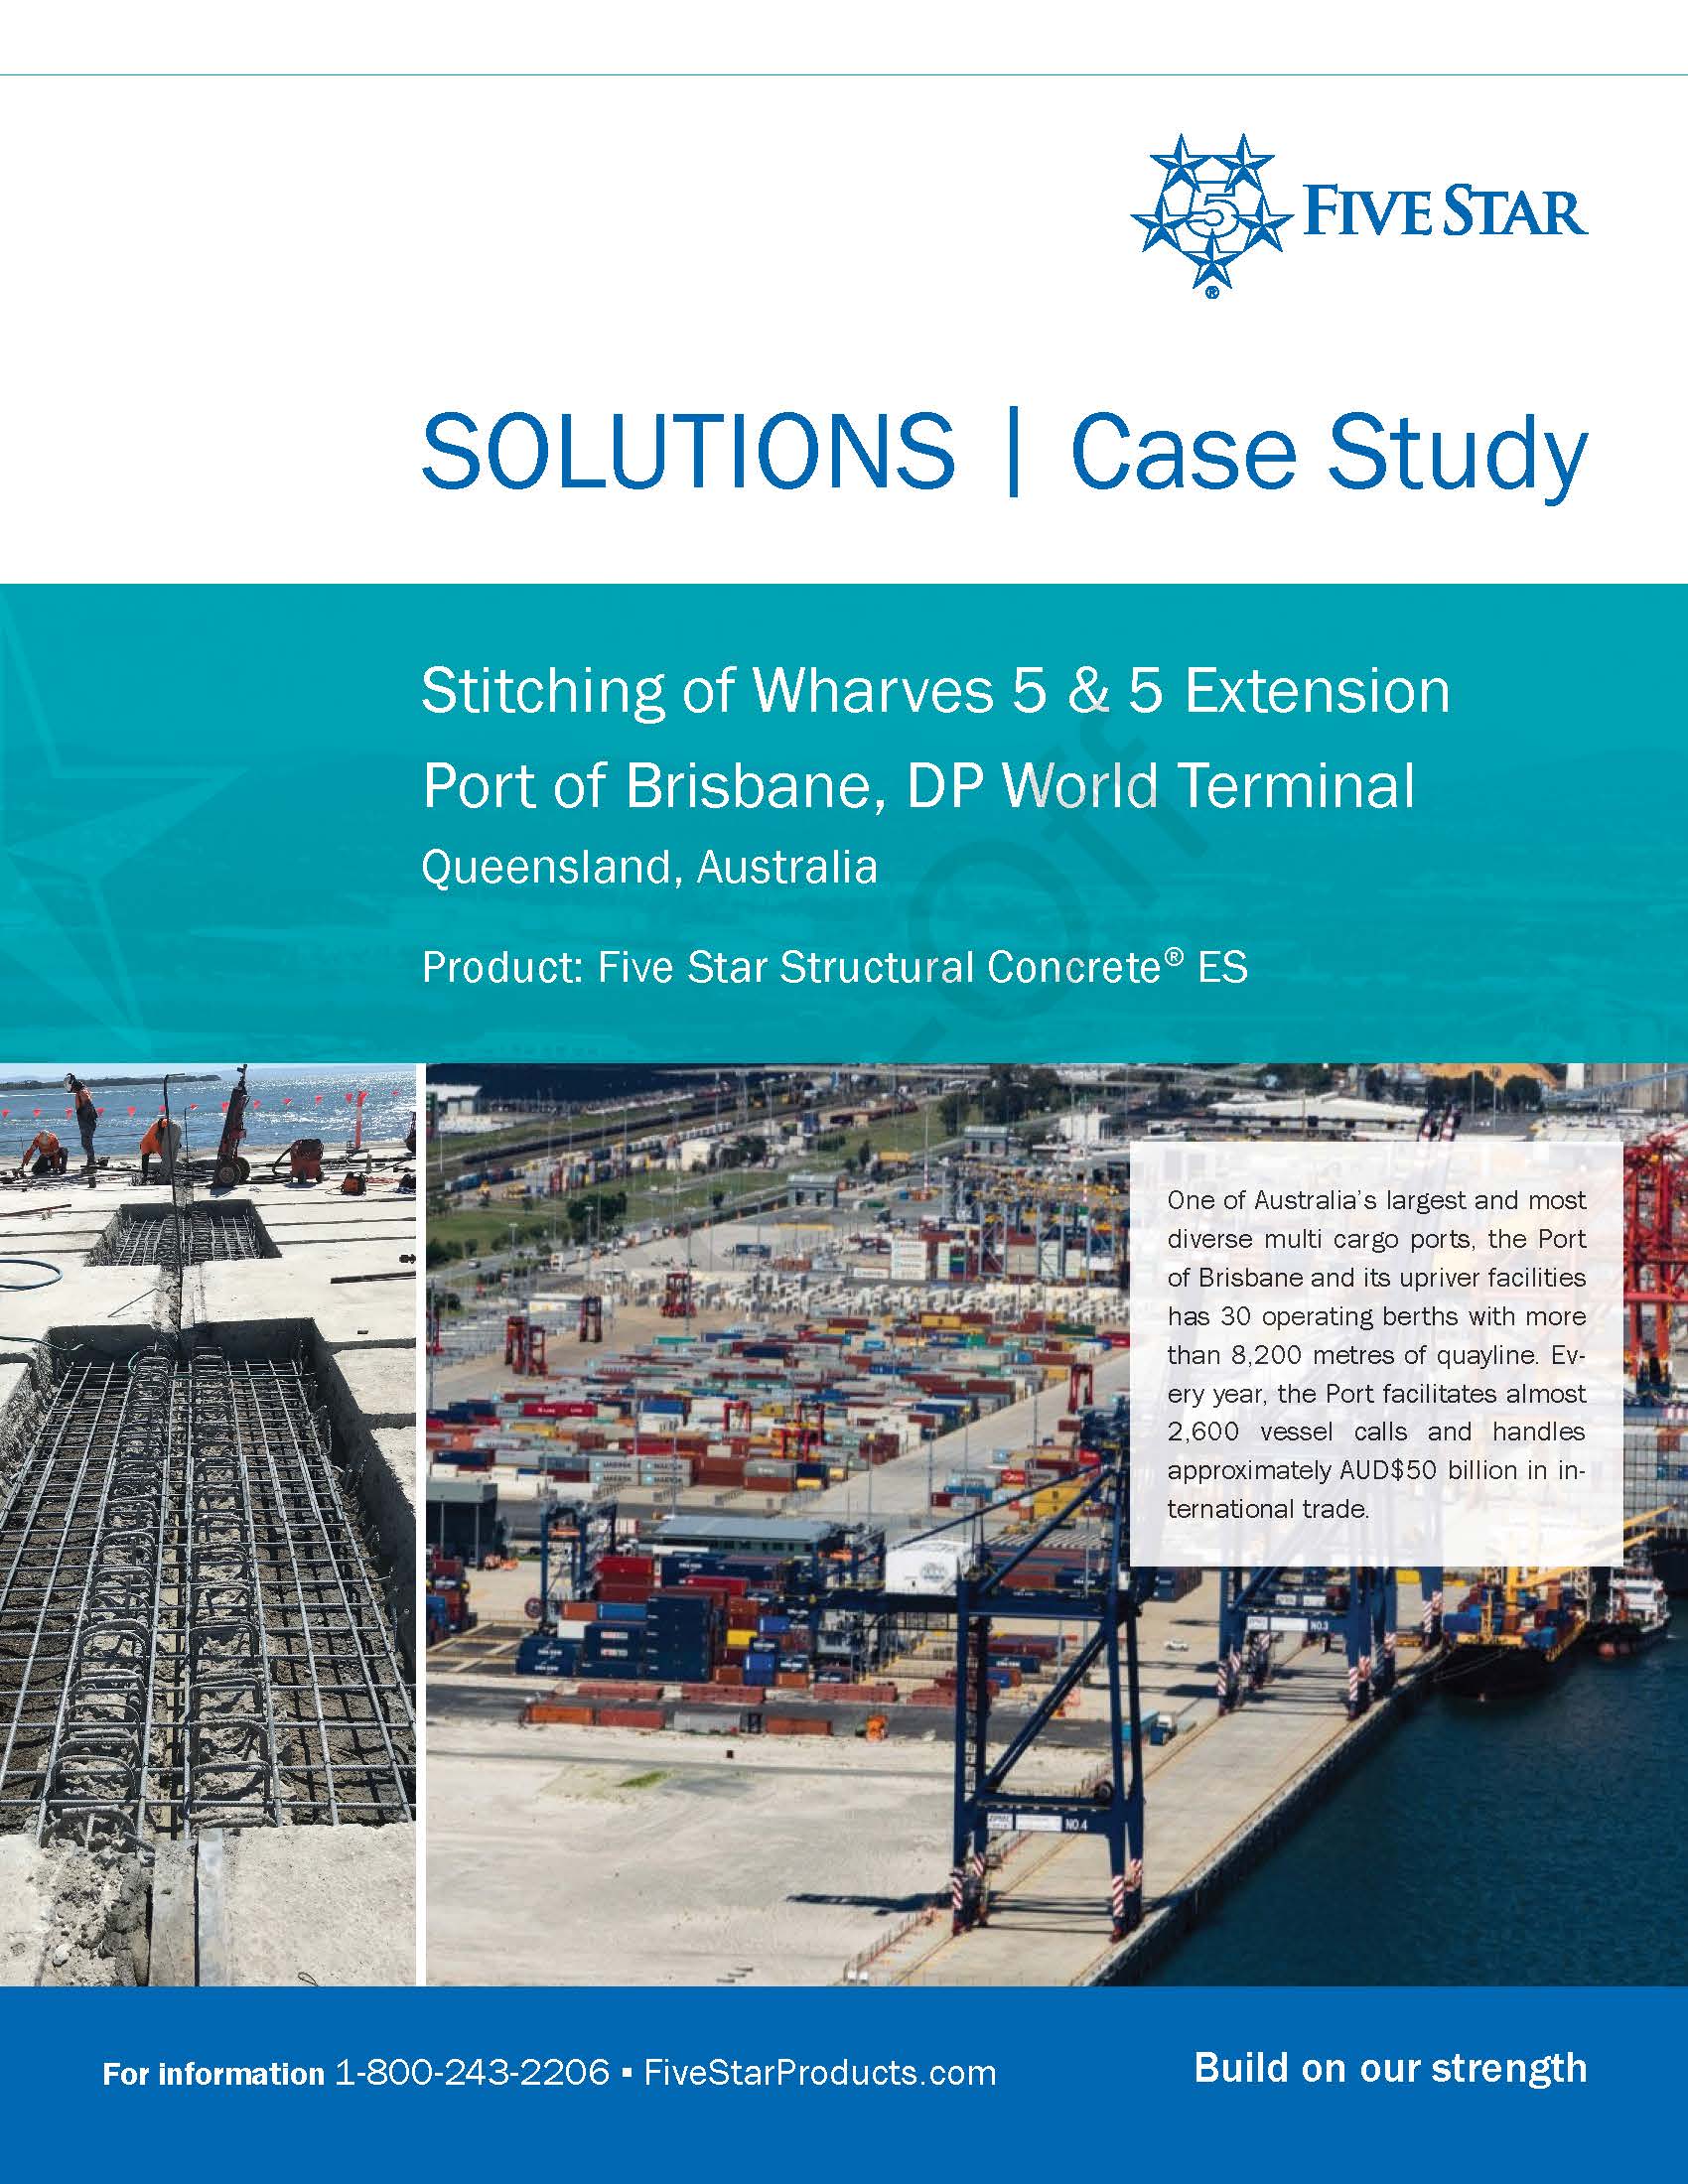 Case Study on Port of Brisbane, Queensland, Australia